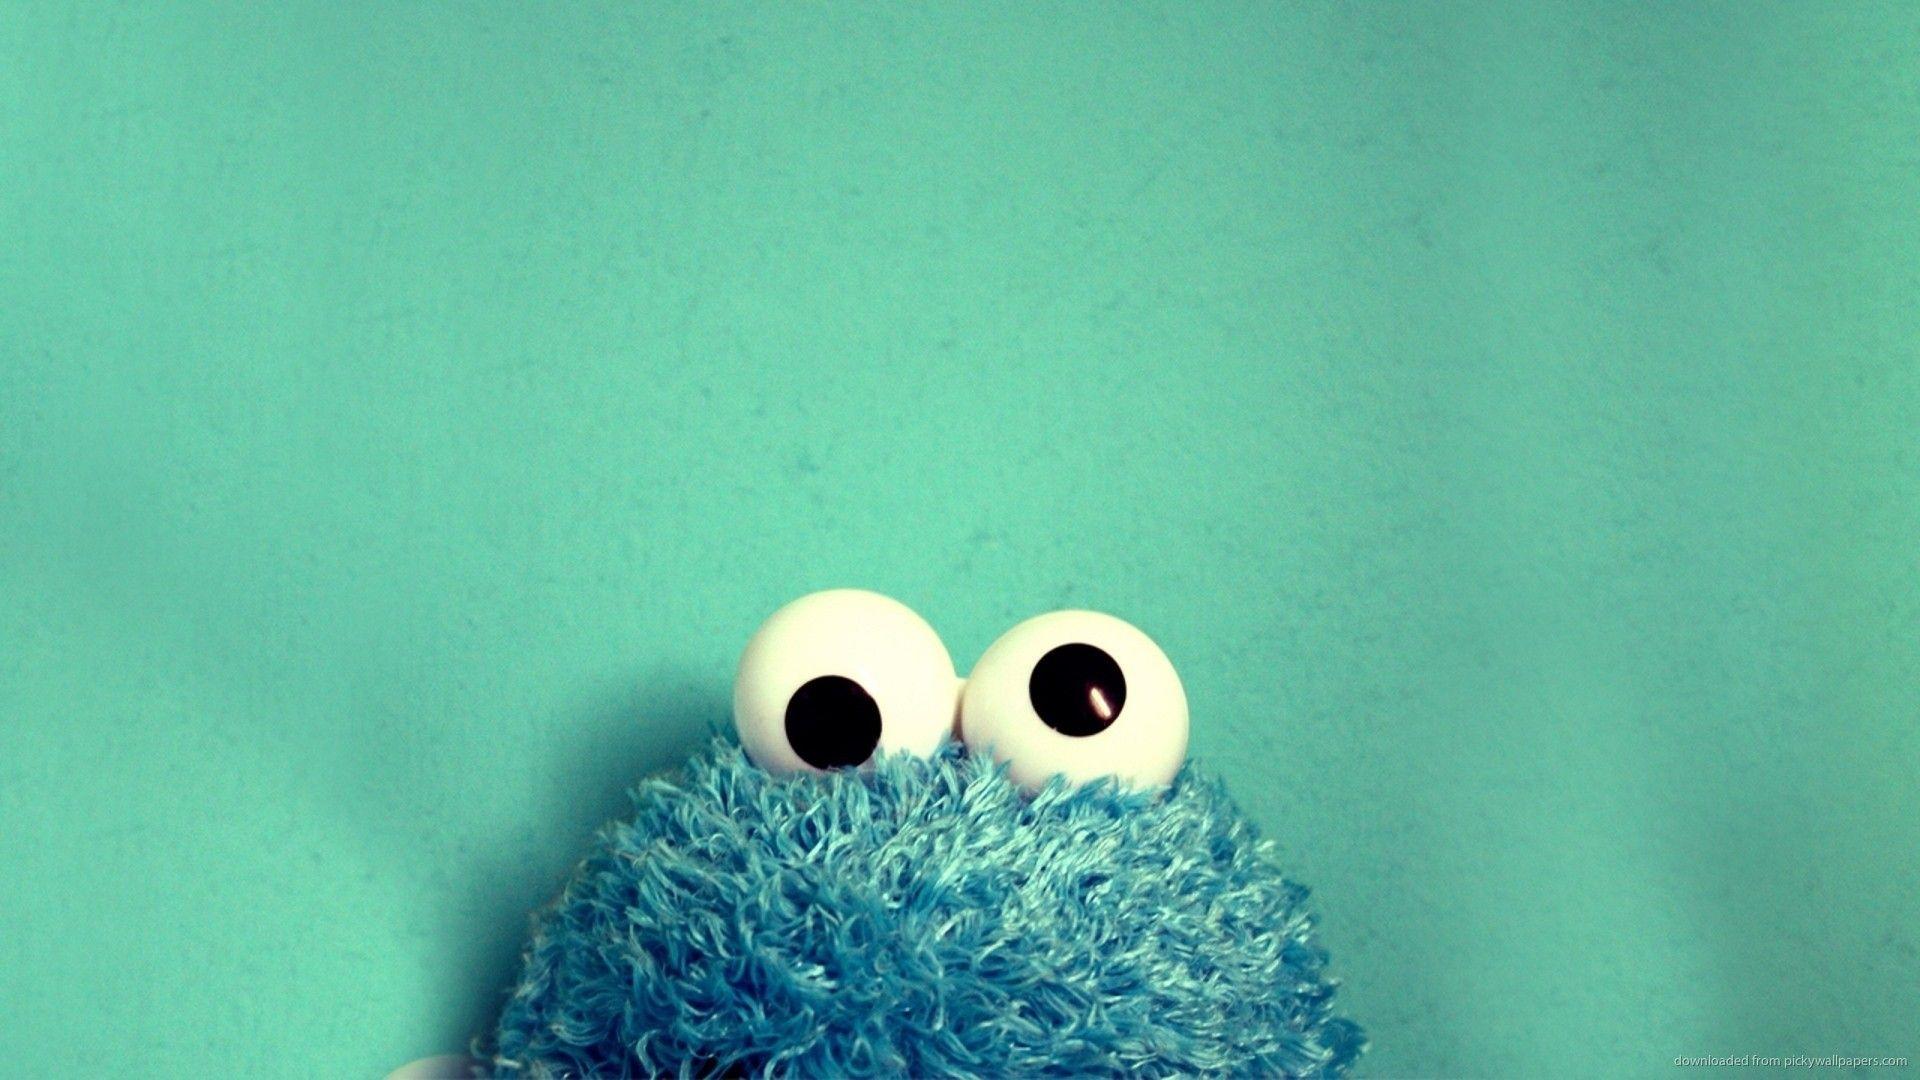 Cookie Monster wallpaperDownload free stunning background